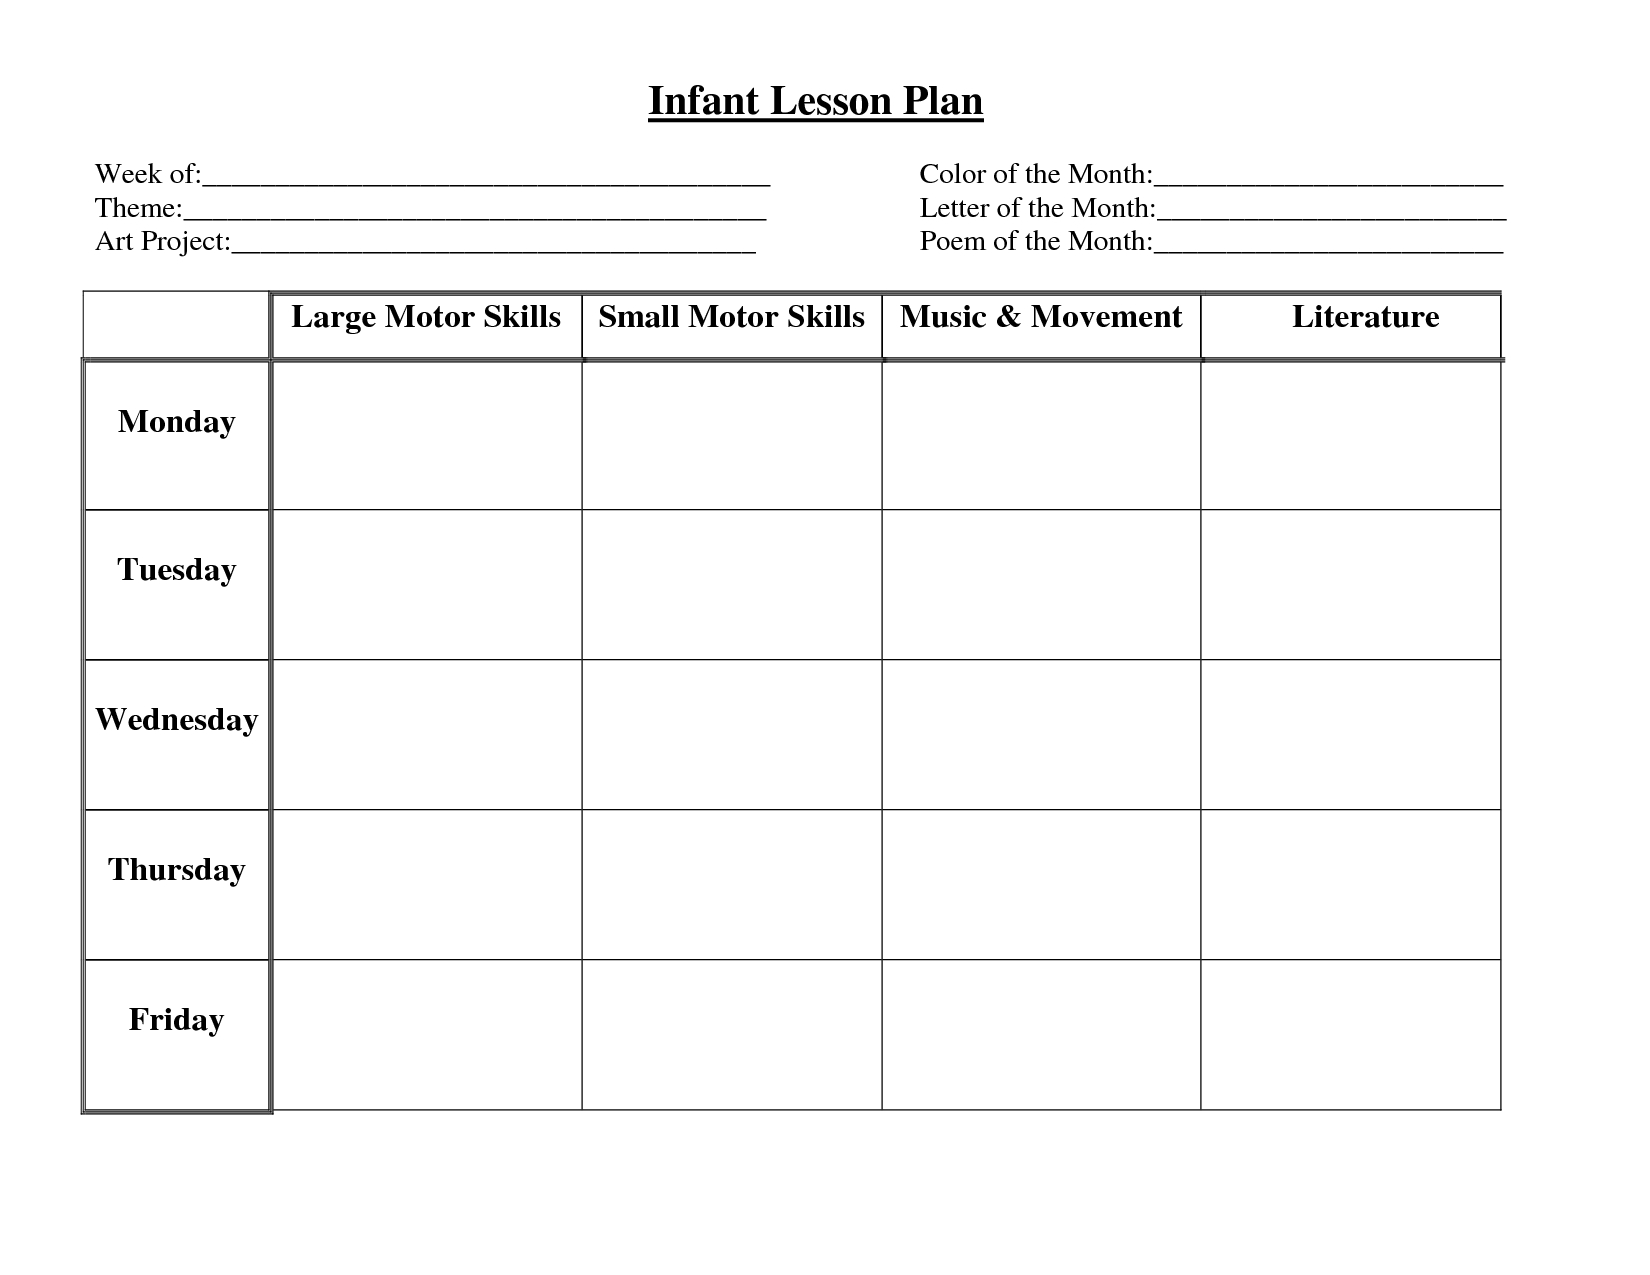 Infant Blank Lesson Plan Sheets | Infant_Lesson_Plan.6100347